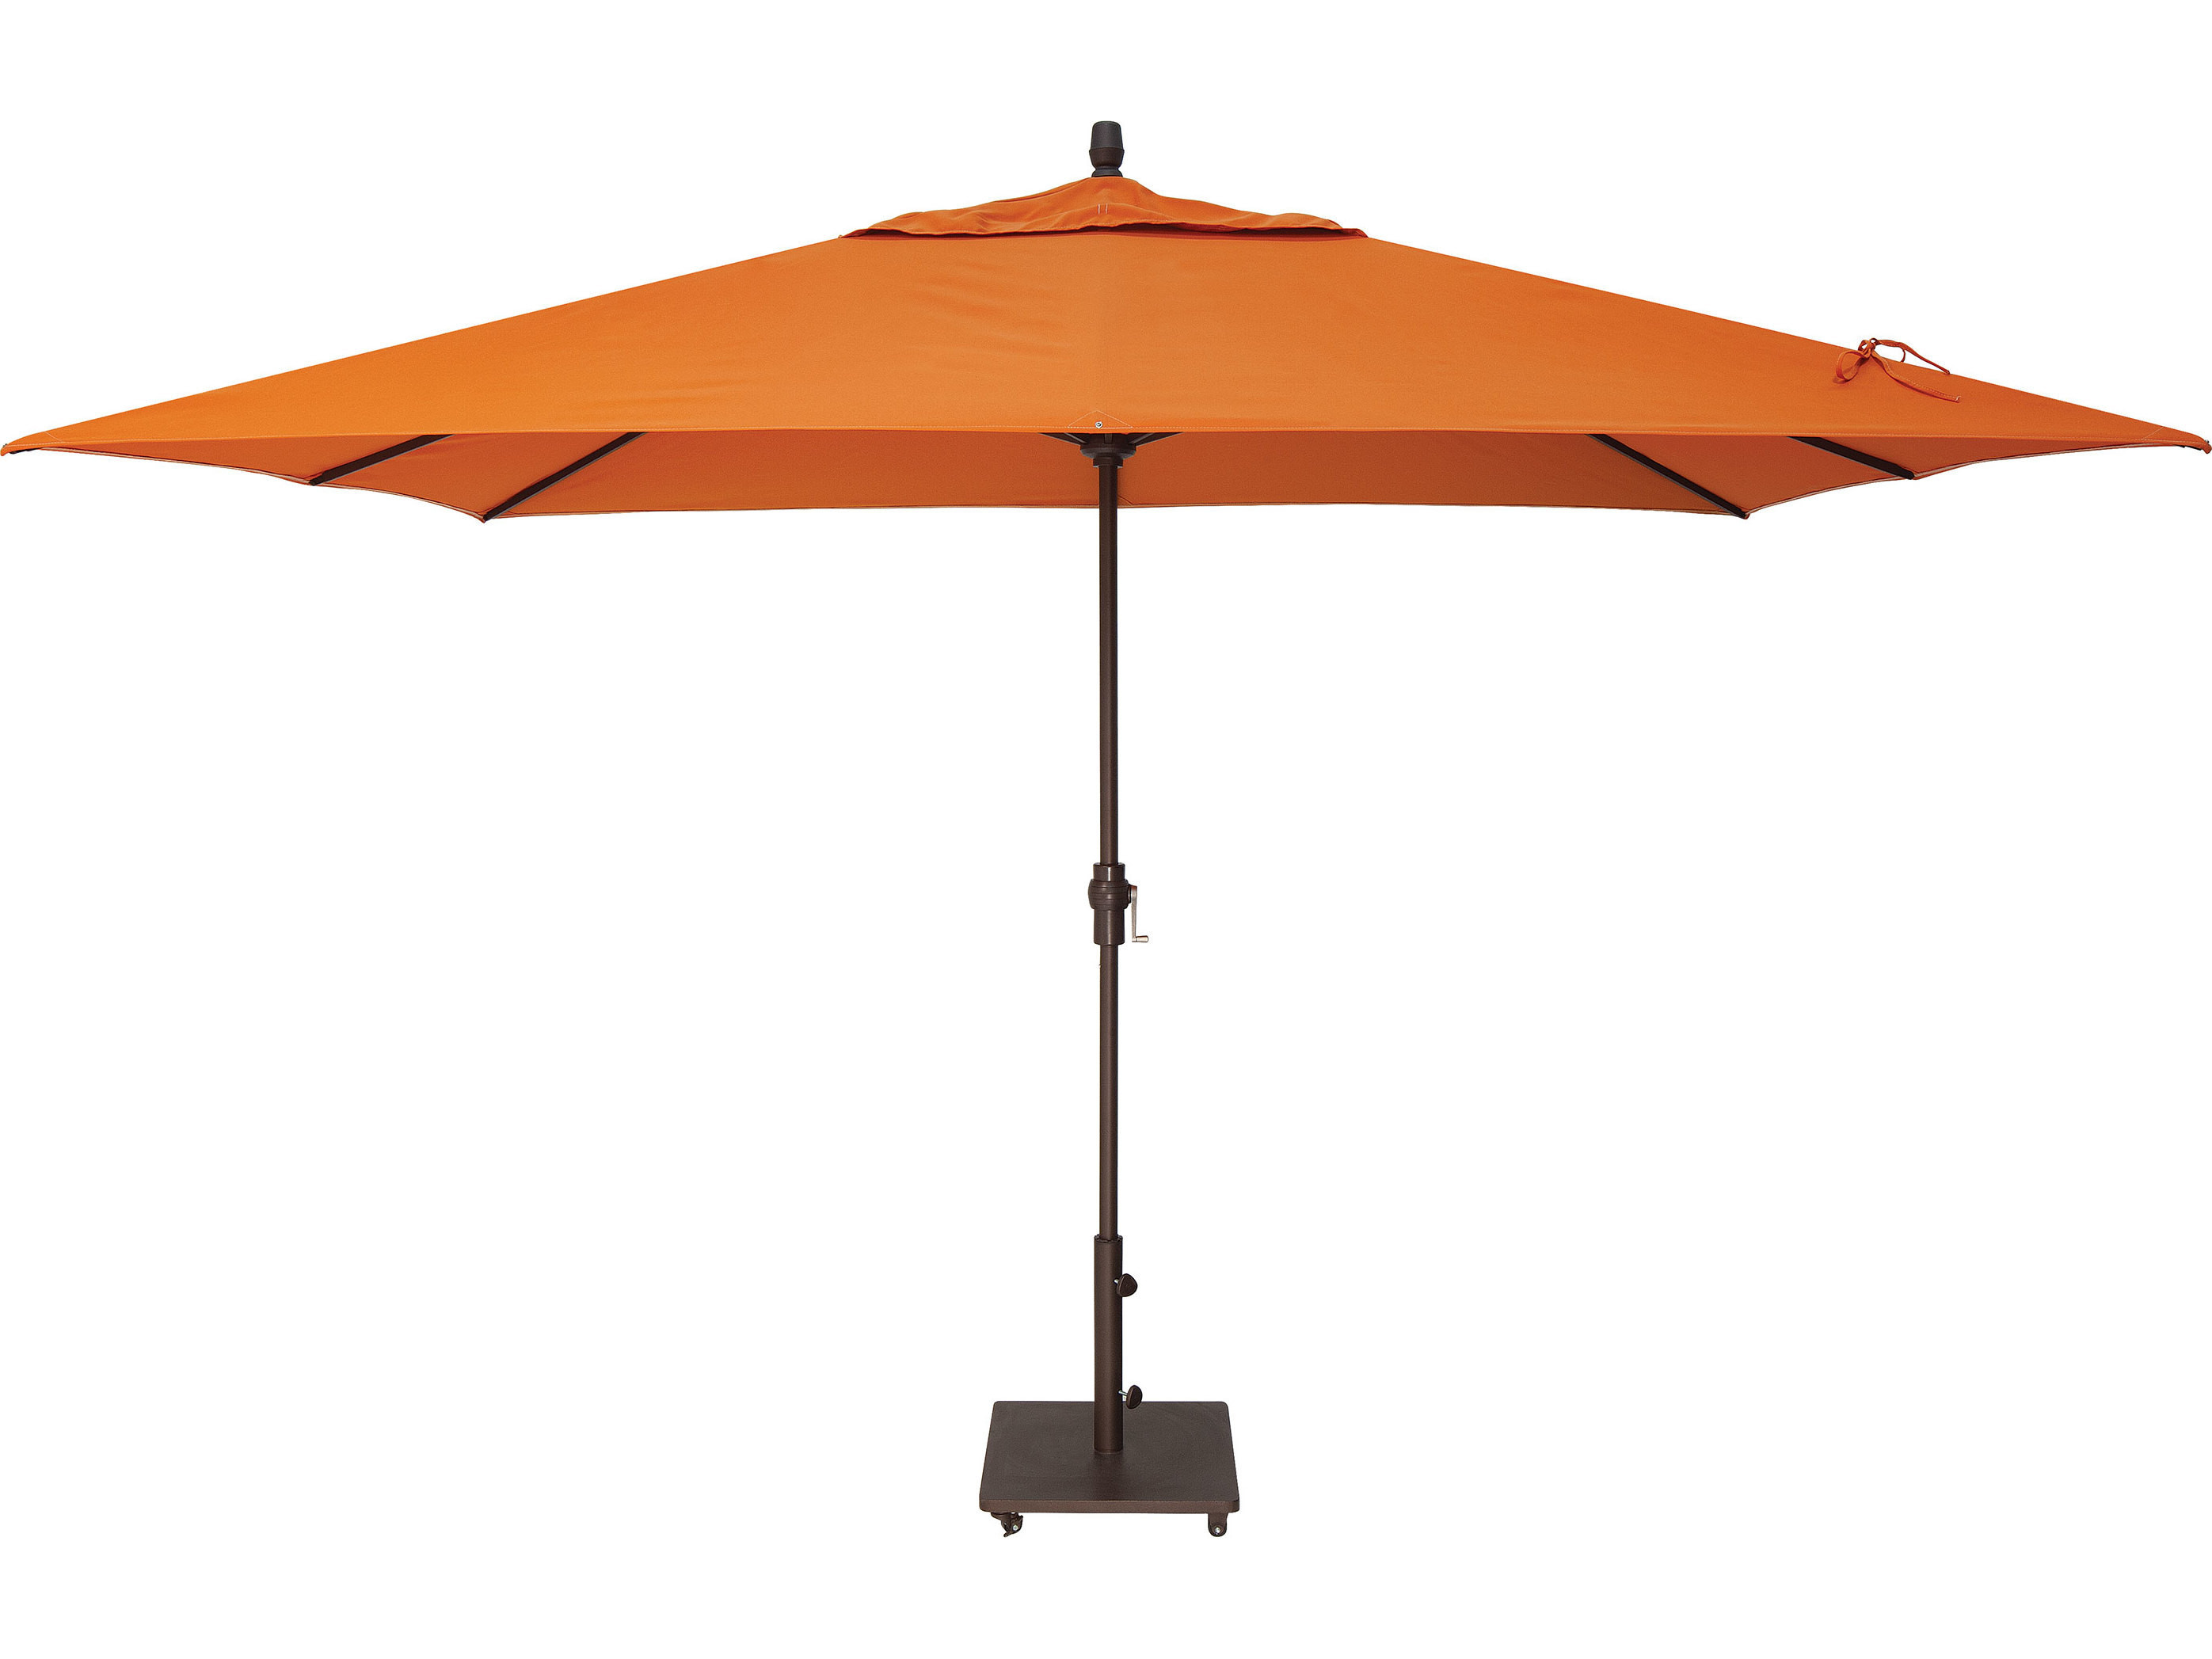 Best ideas about Rectangular Patio Umbrellas
. Save or Pin Treasure Garden Market Aluminum 8 x 11 Crank Lift Now.